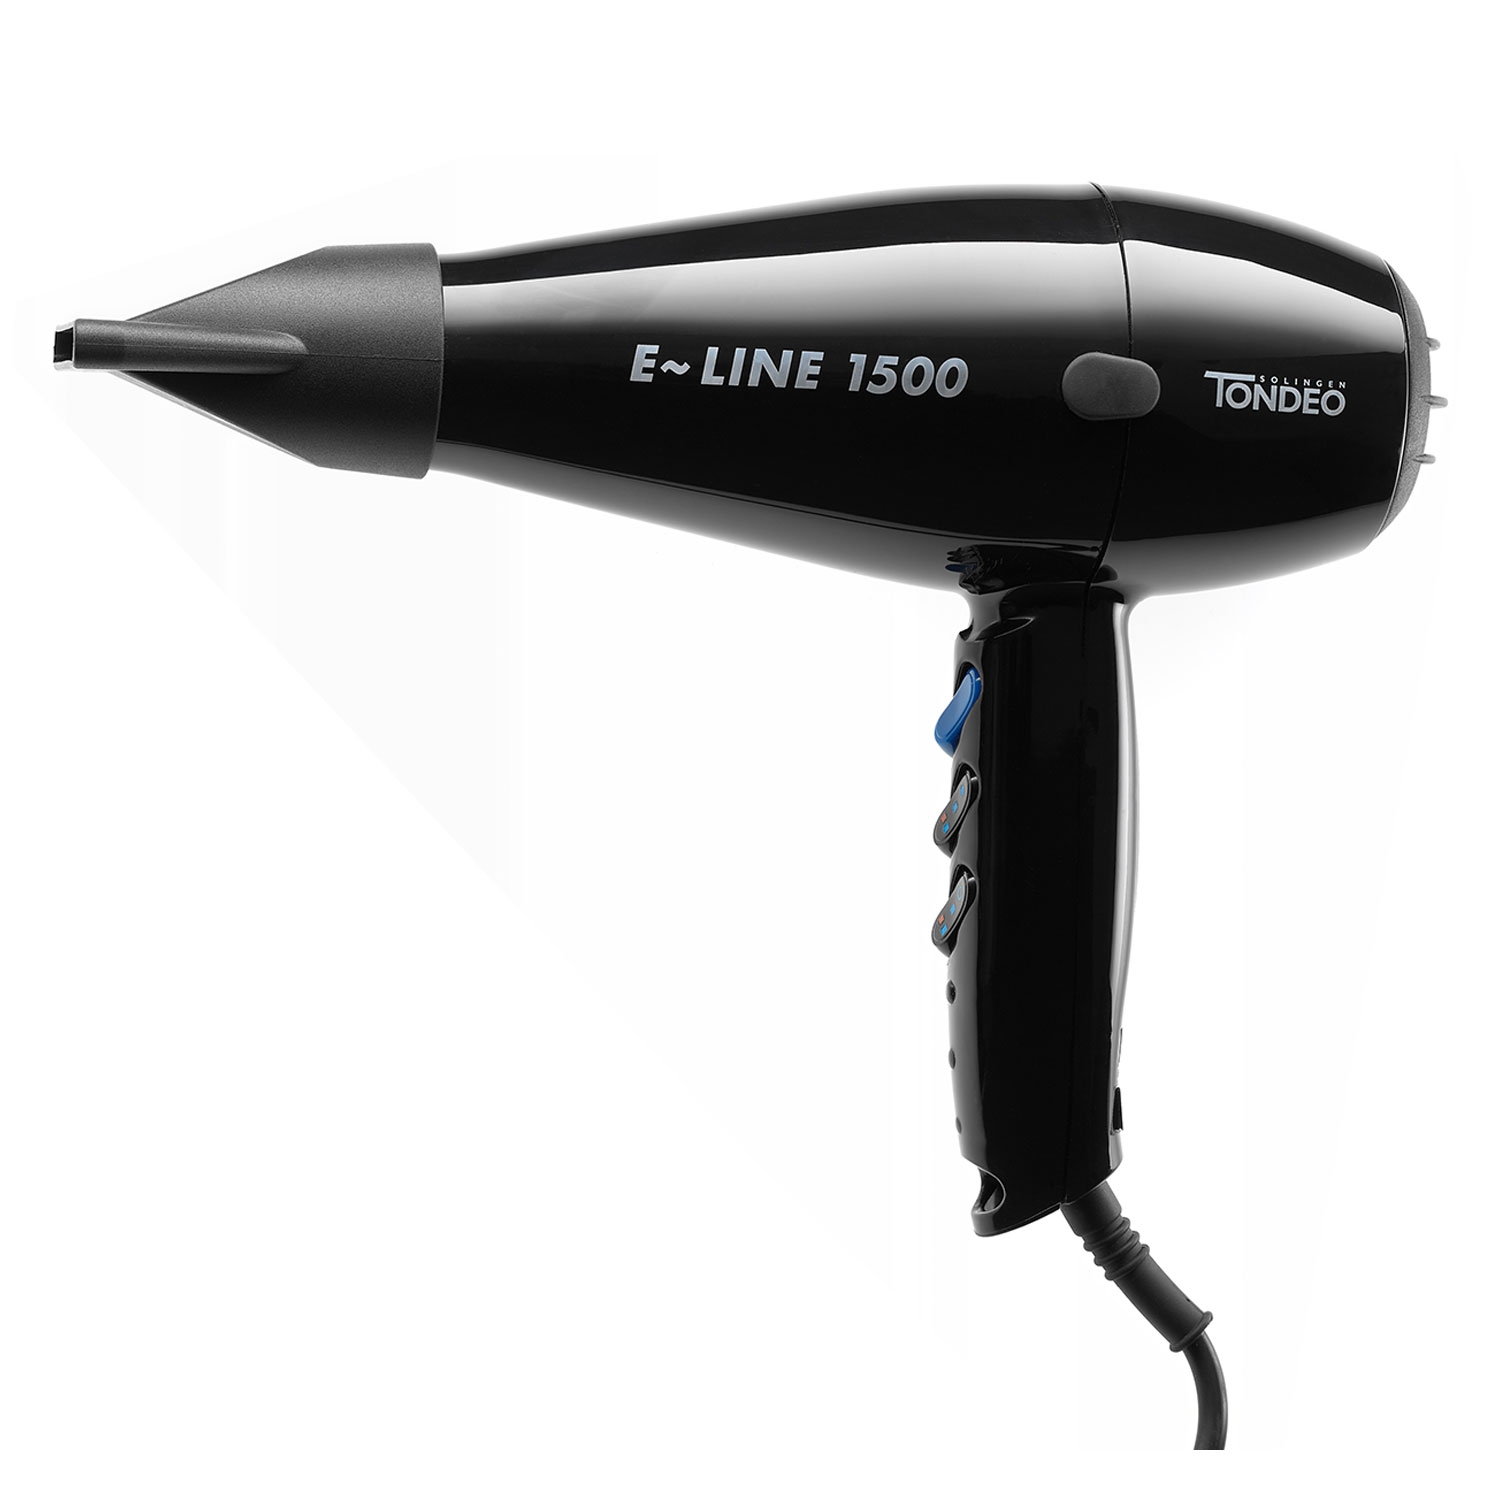 Produktbild von Tondeo Hot Tools - Tondeo Hairdryer E-Line 1500 Black